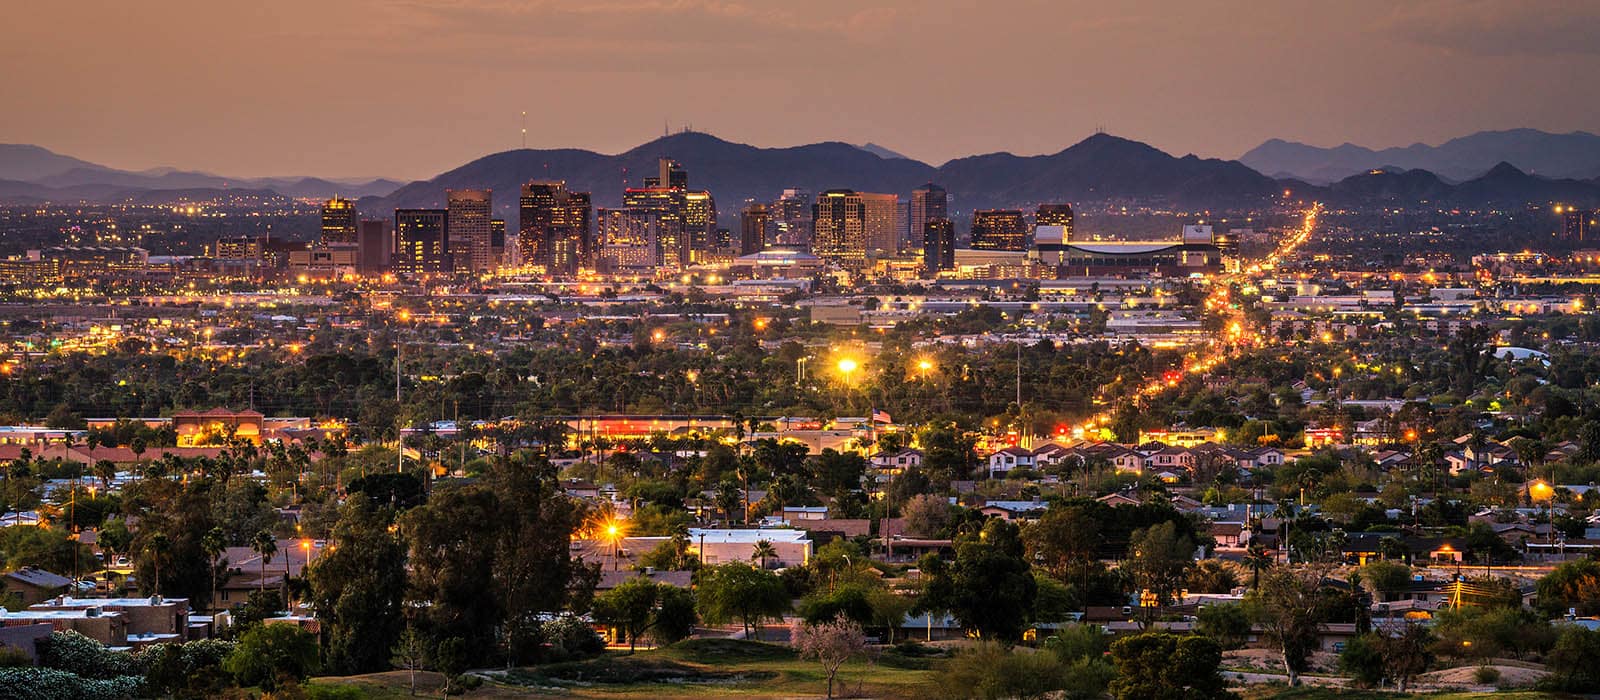 Scottsdale City - Arizona data privacy laws